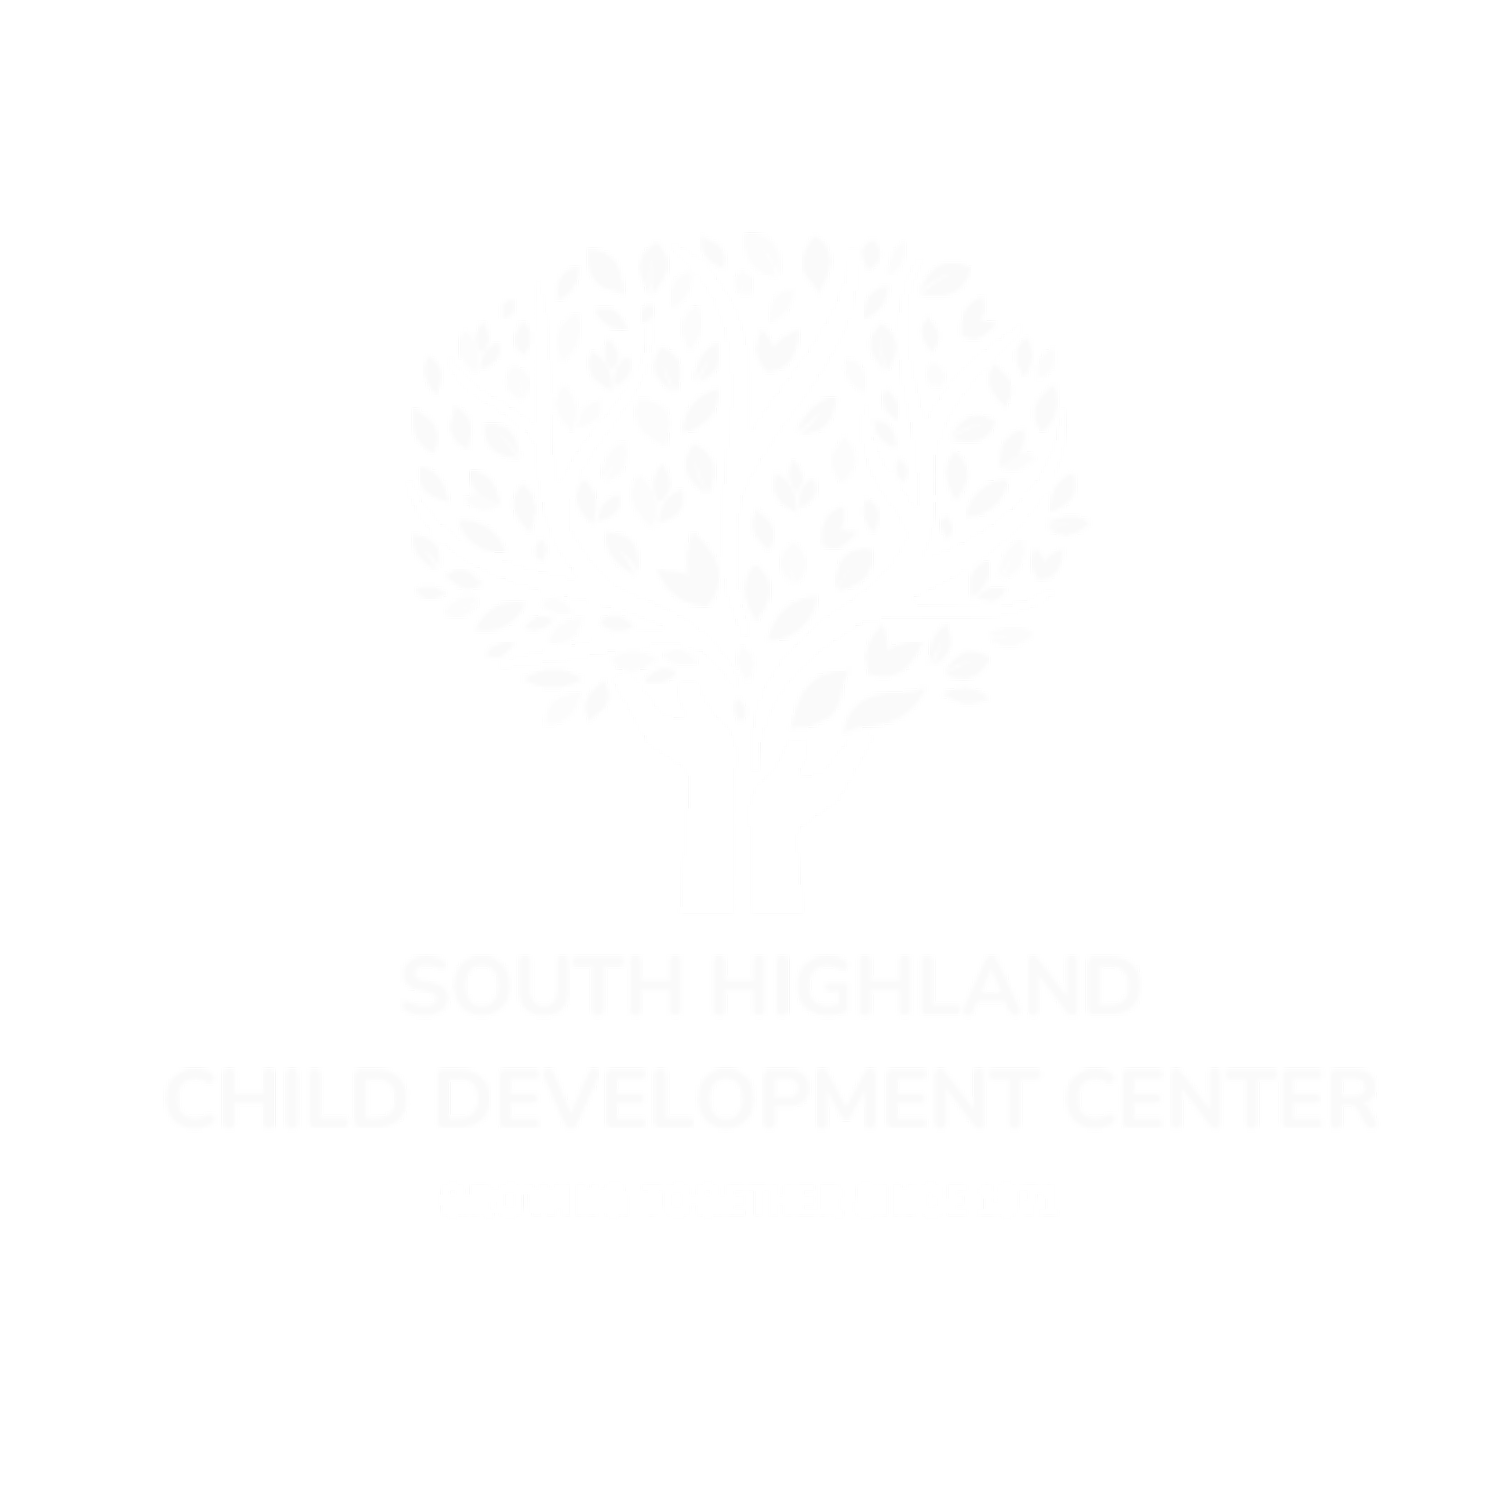 South Highland Child Development Center